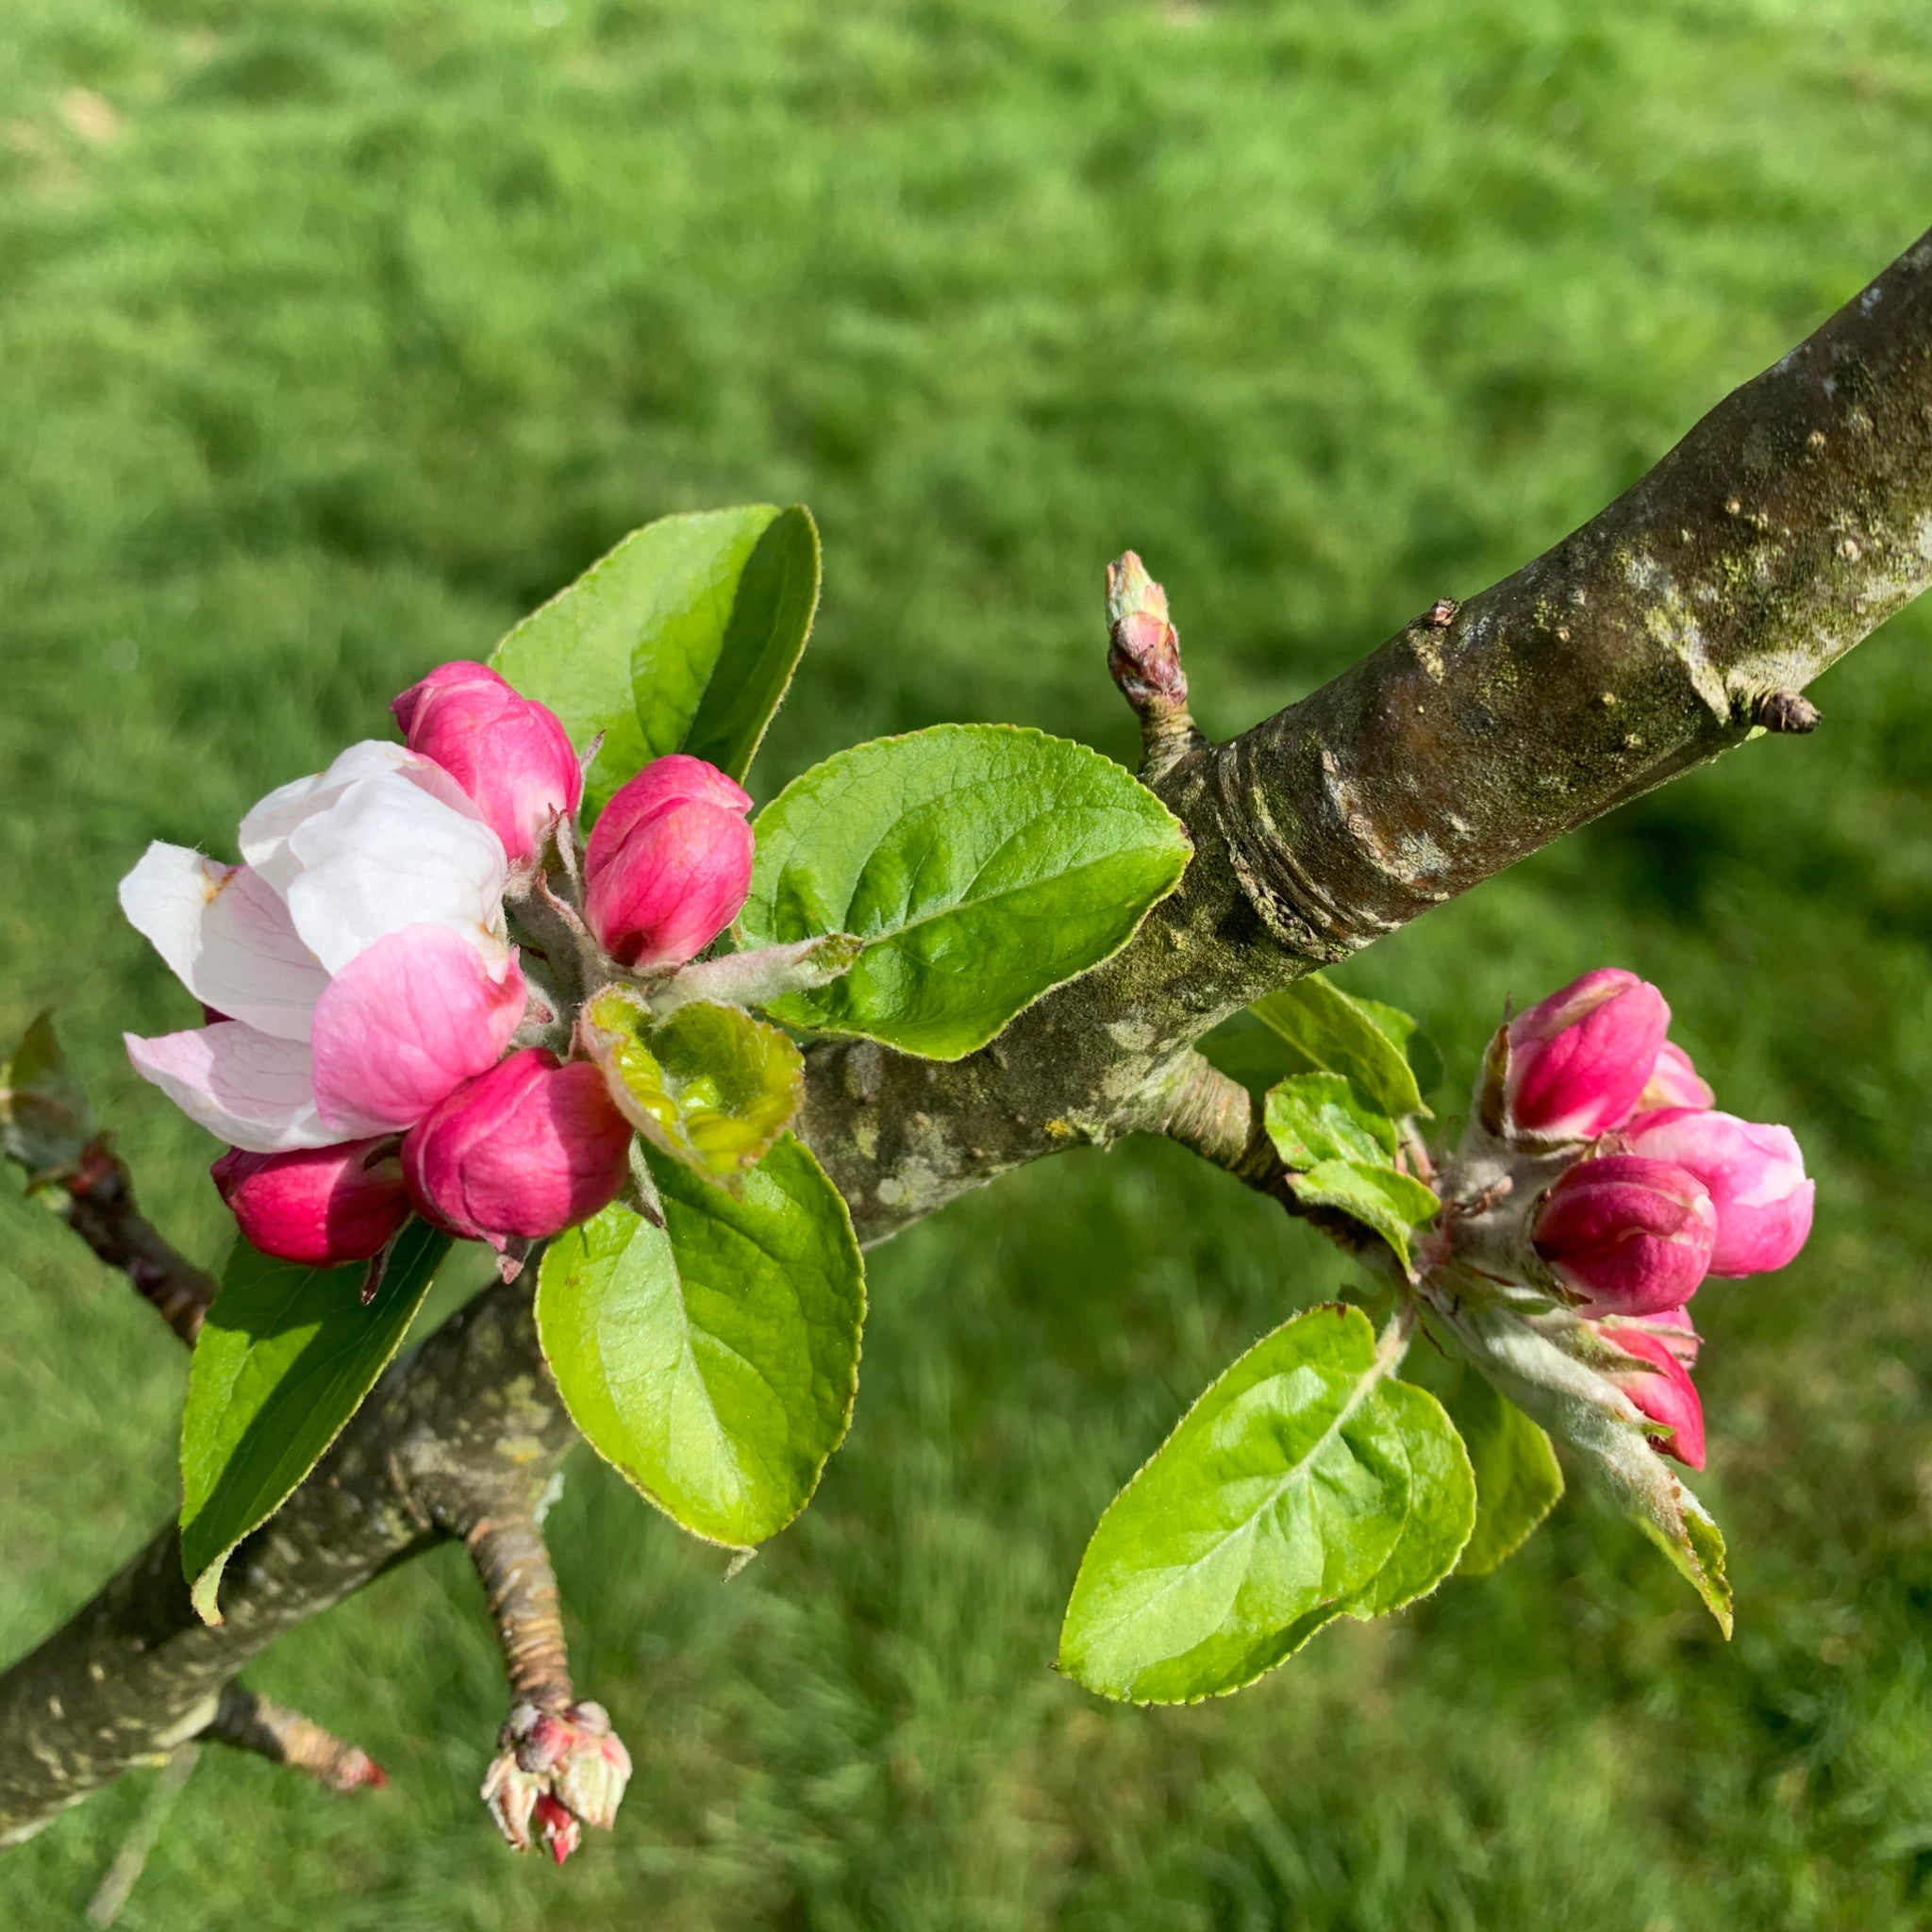 Lorna Doone apple tree blossom